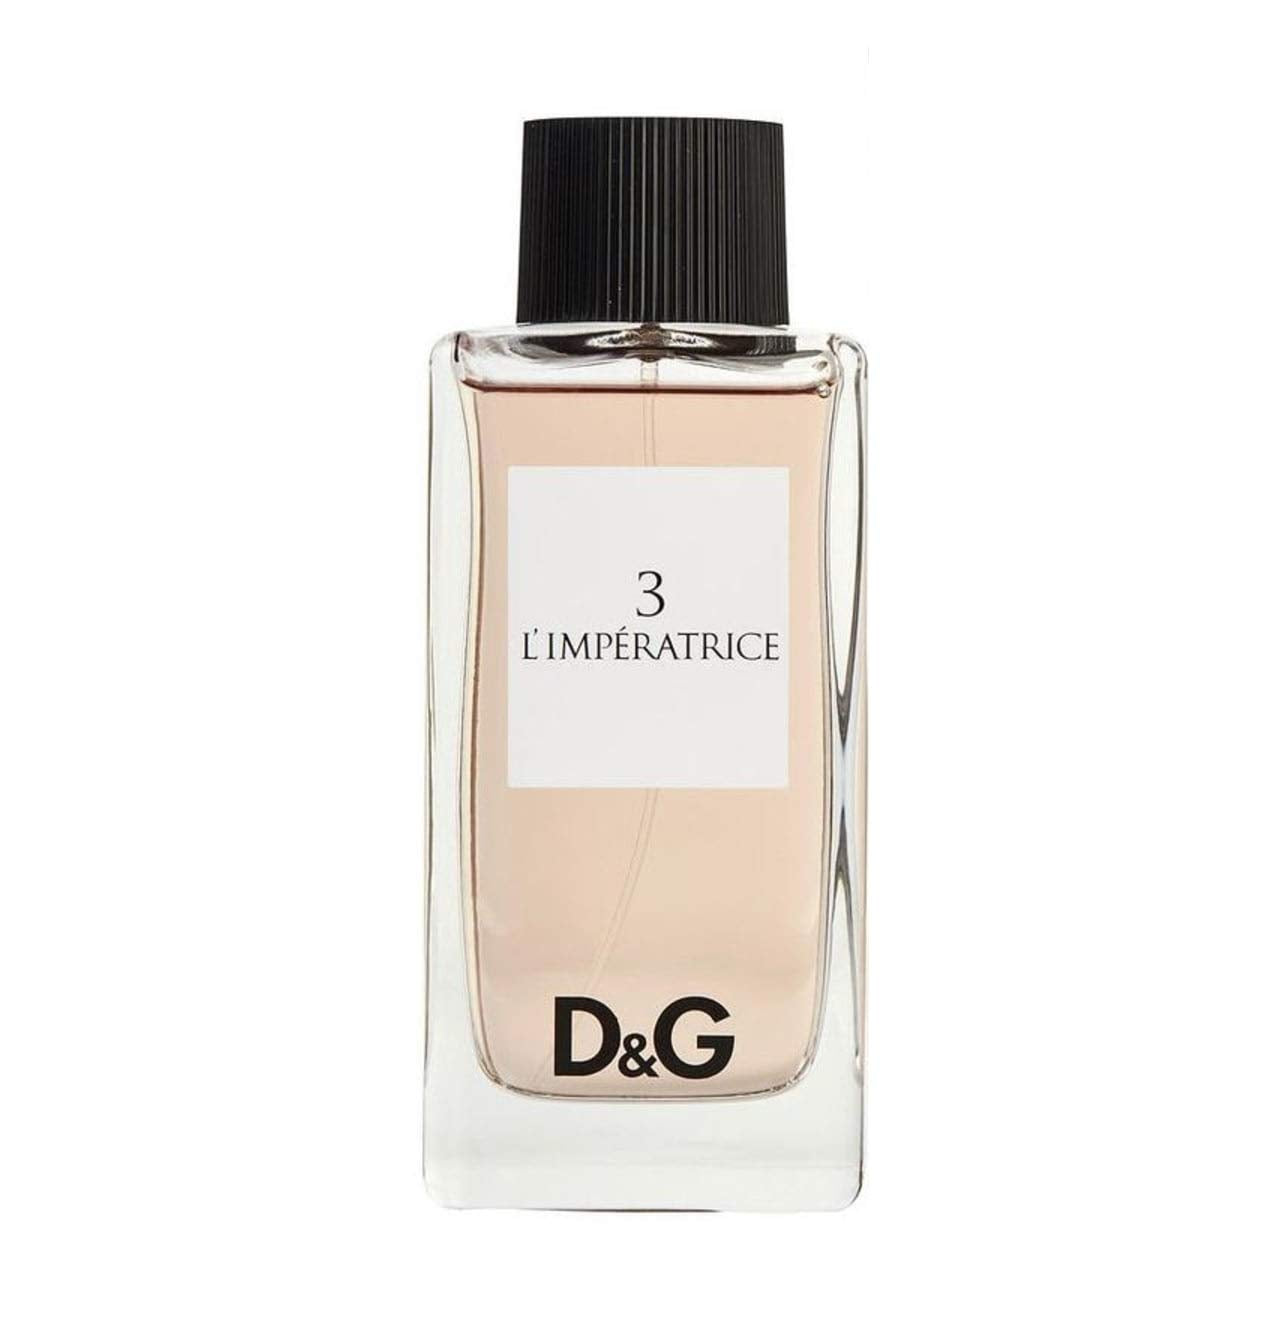 Dolce and Gabbana L'Imperatrice Eau de Toilette for Women, 100 ml